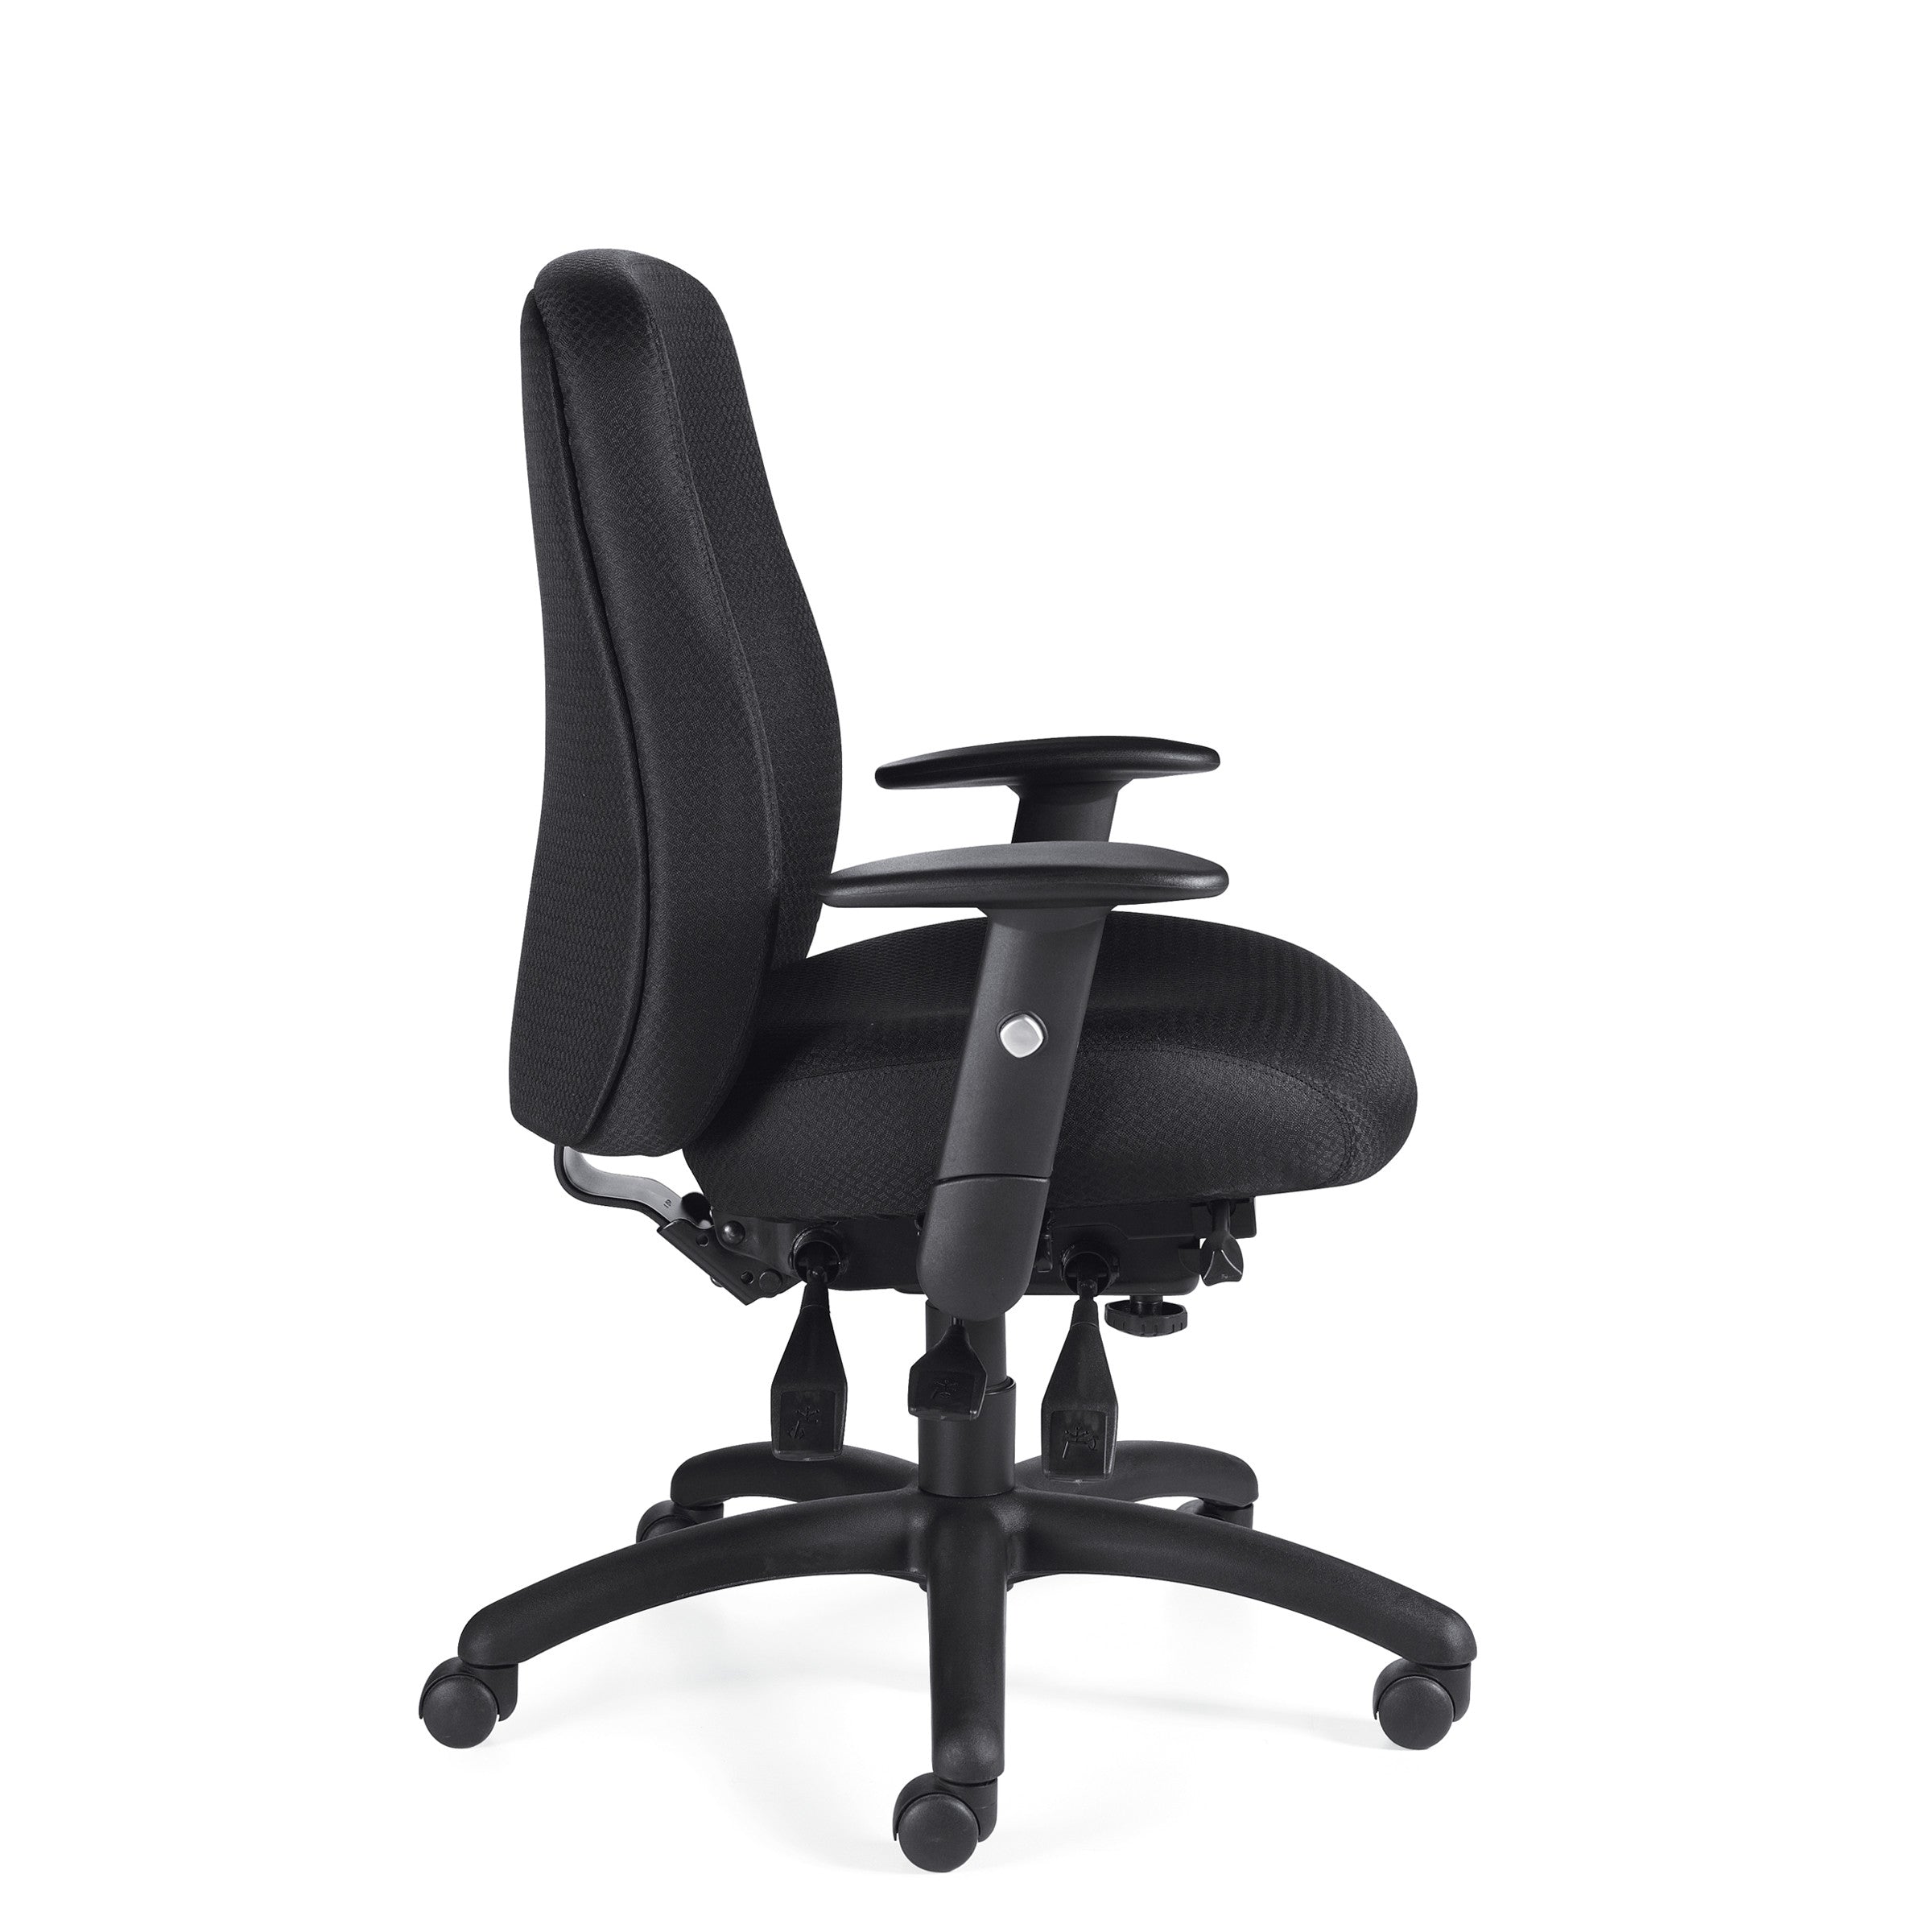 Customized Multi-Function Task Chair G11710 - Kainosbuy.com